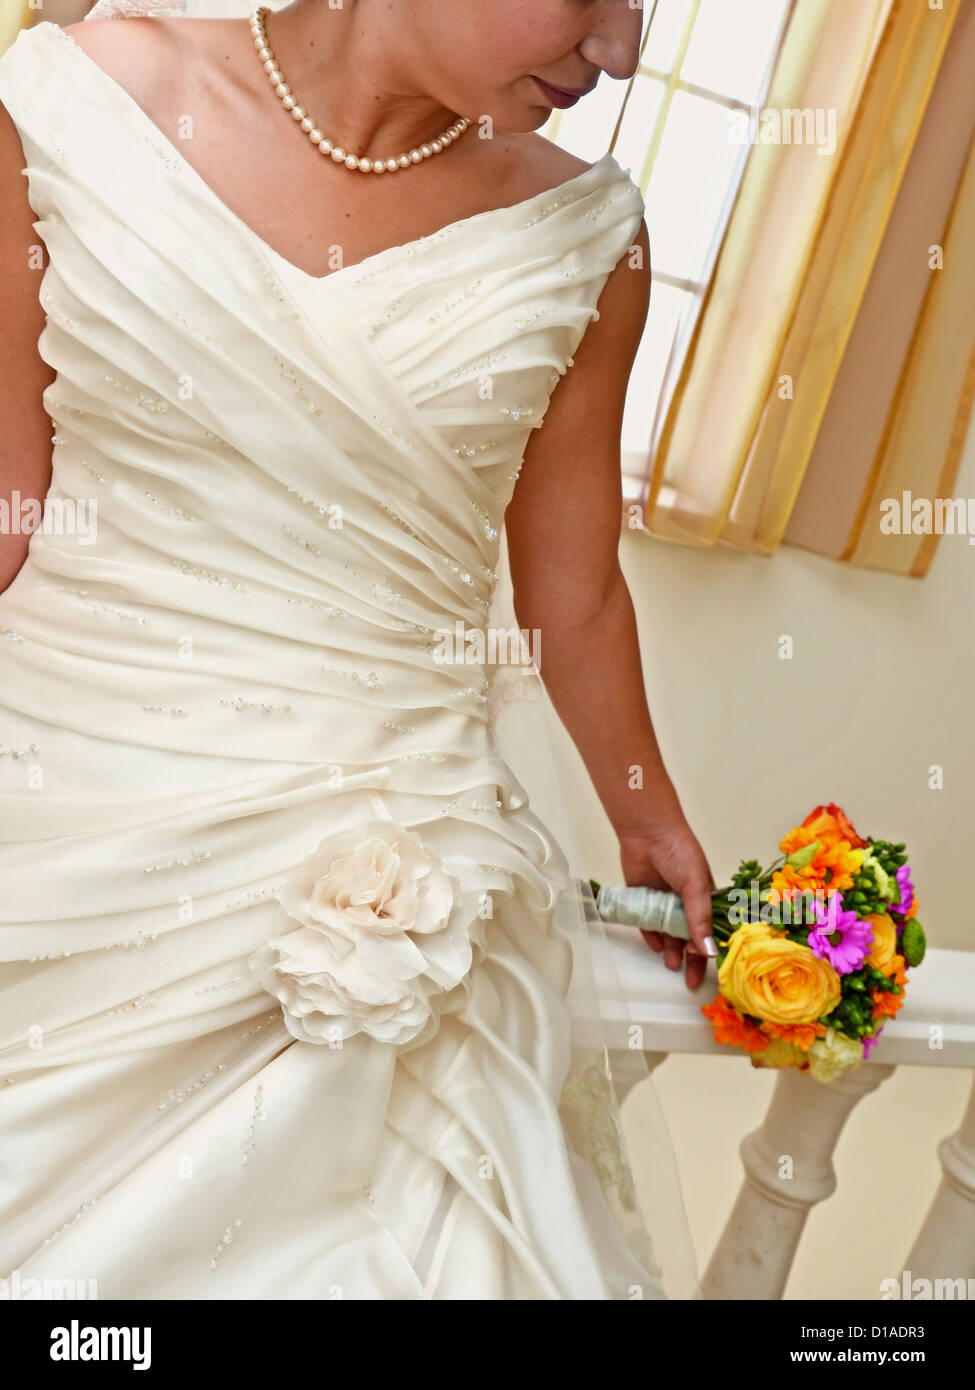 Beautiful bride portrait at home Stock Photo